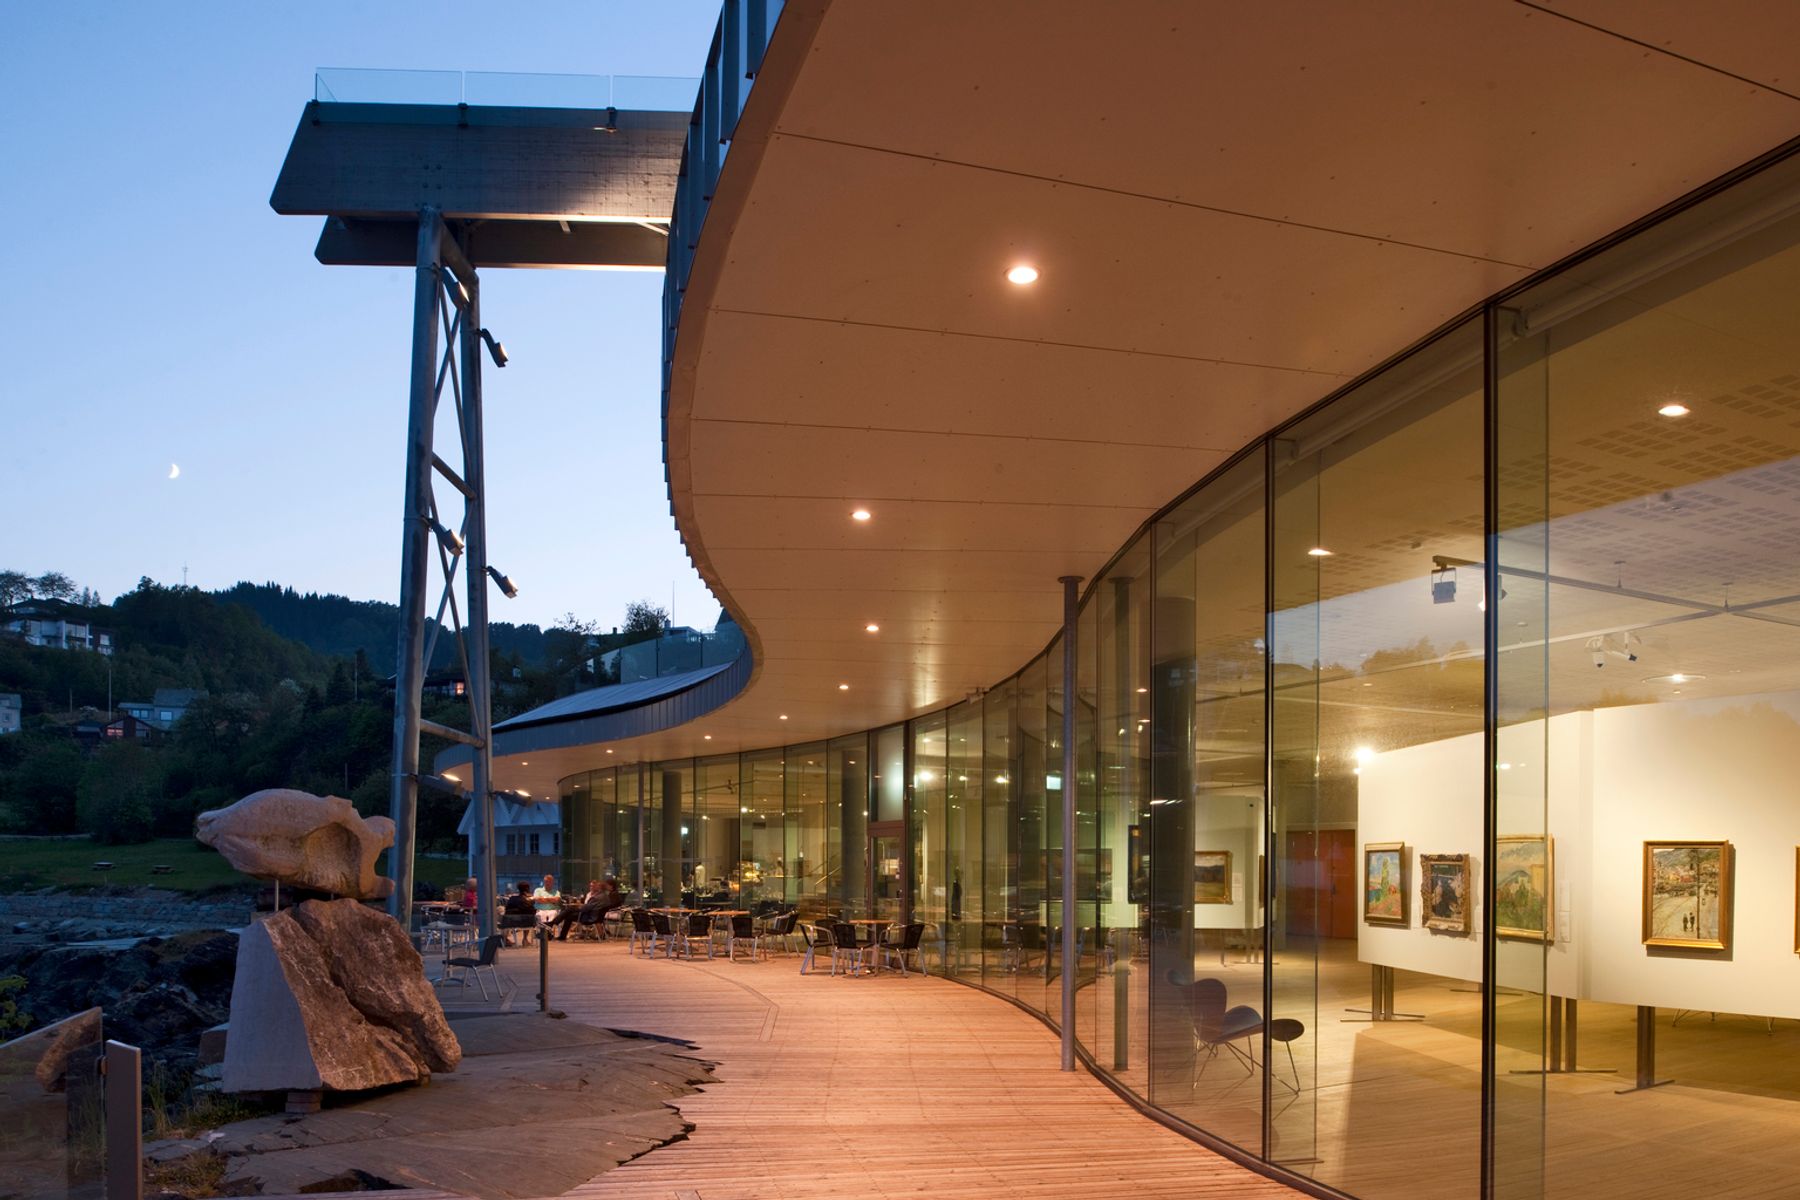 Oseana Art & Culture Center, Os. Architecture: Grieg Arkitekter, Bergen. Lighting design: Multiconsult AS. Photography: Thomas Mayer, Neuss.